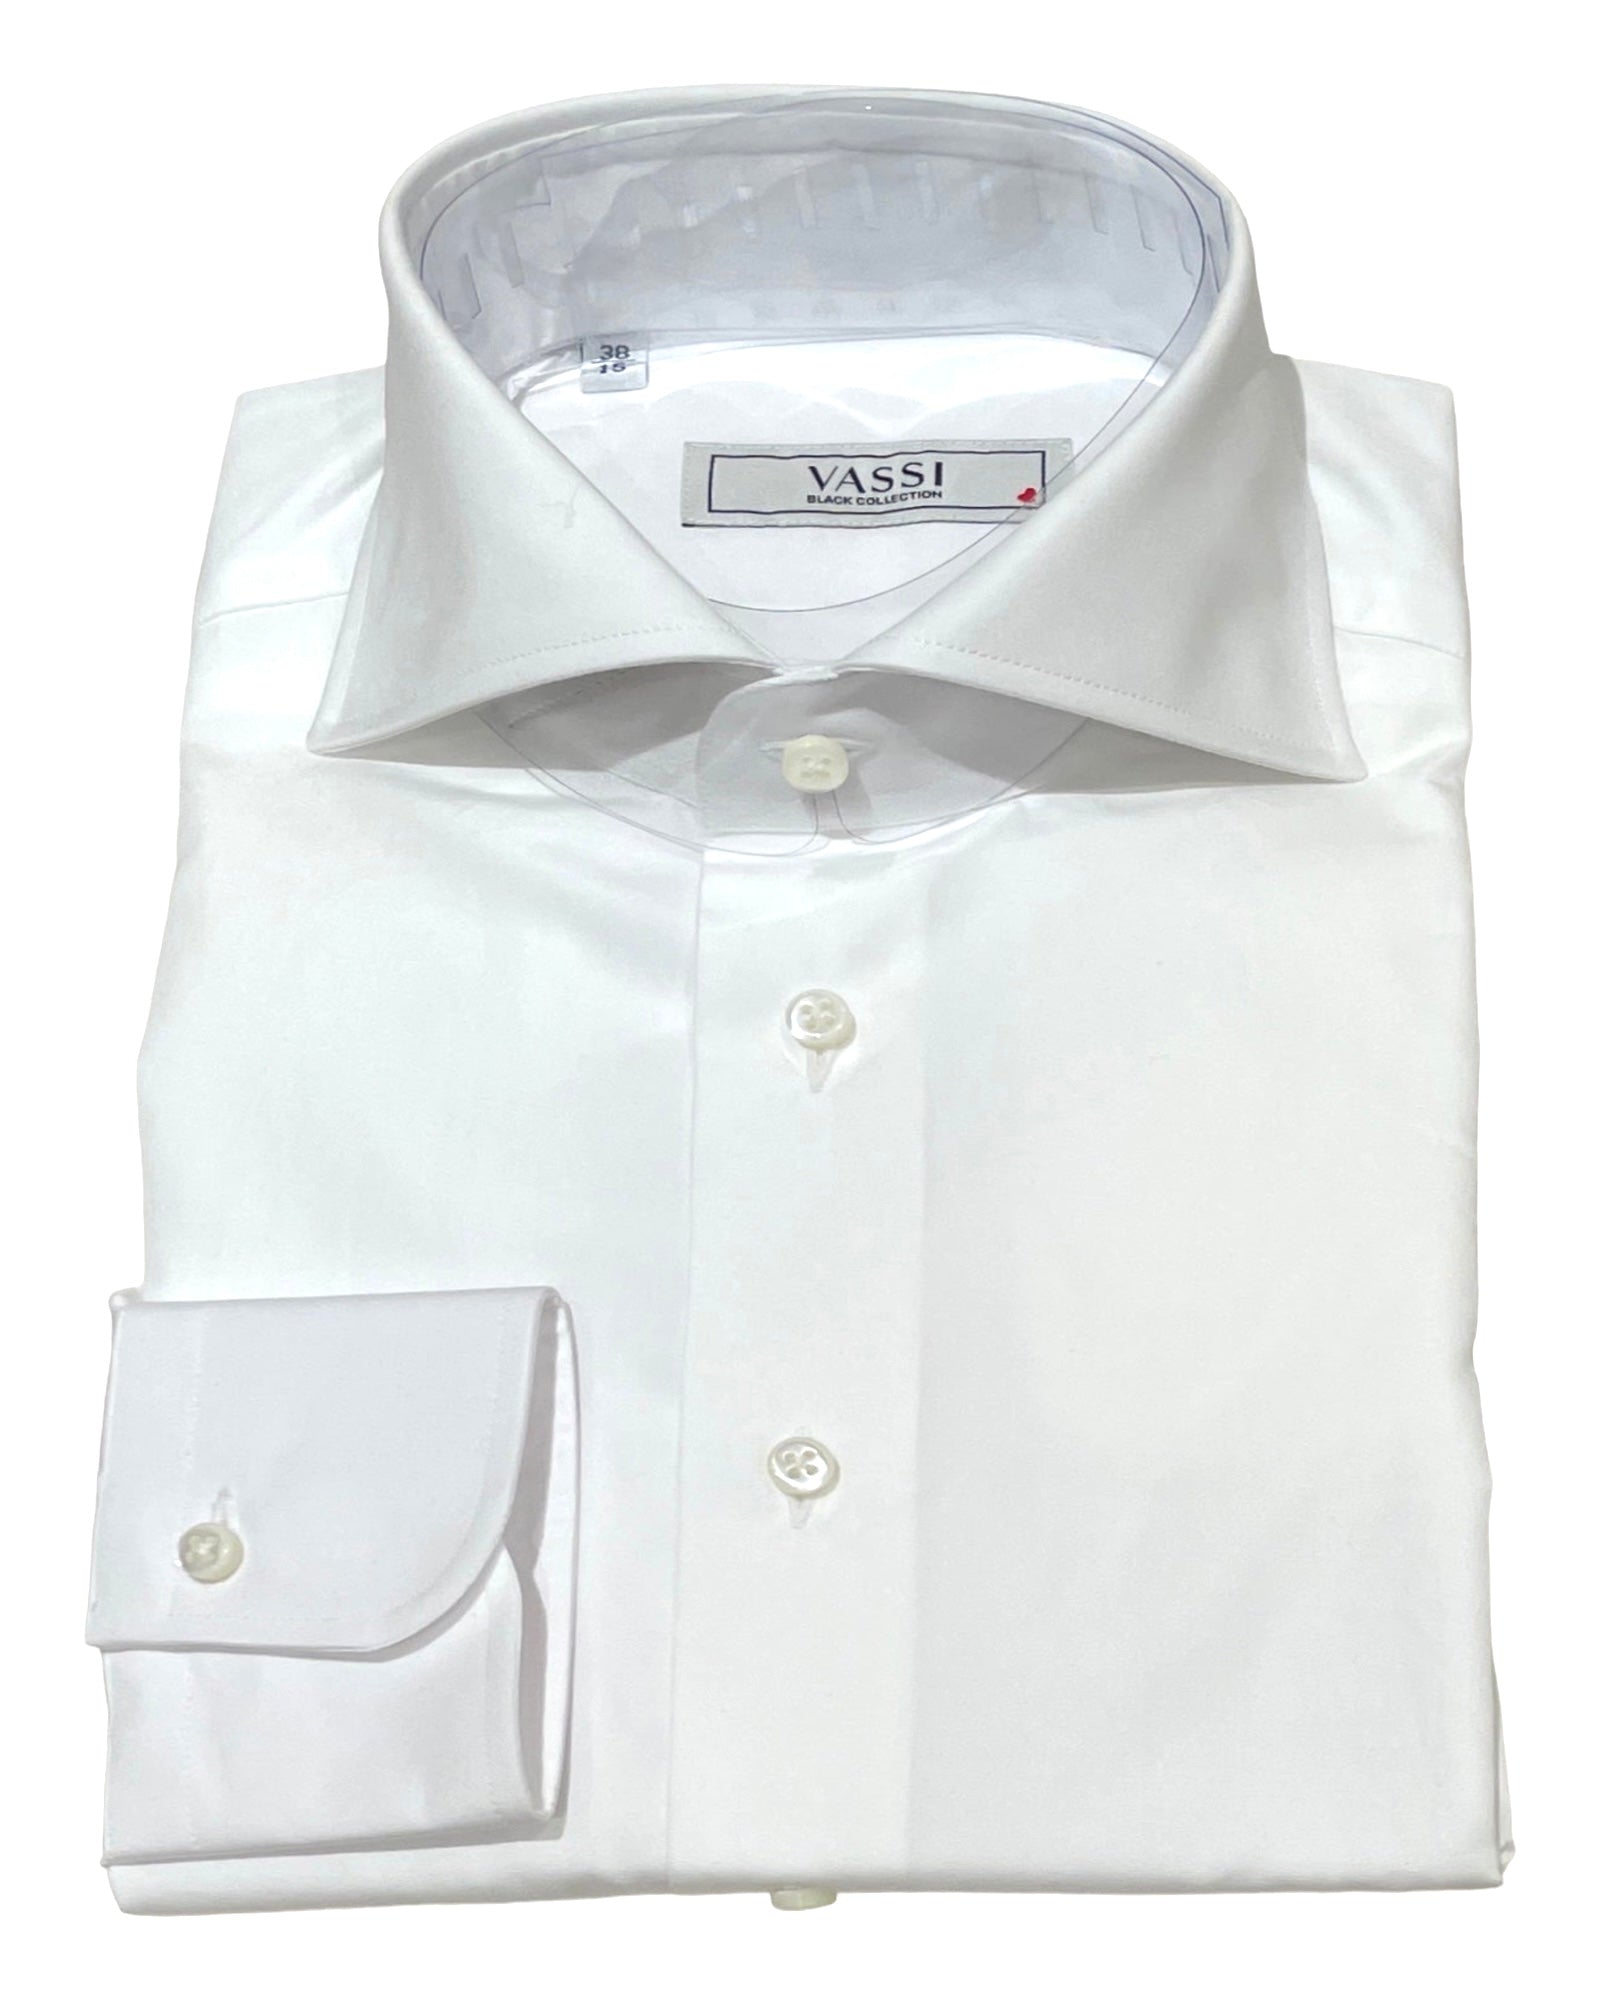 Essential Semi-Spread Collar Dress Shirt, 2 Ply Super 120 -Plain White